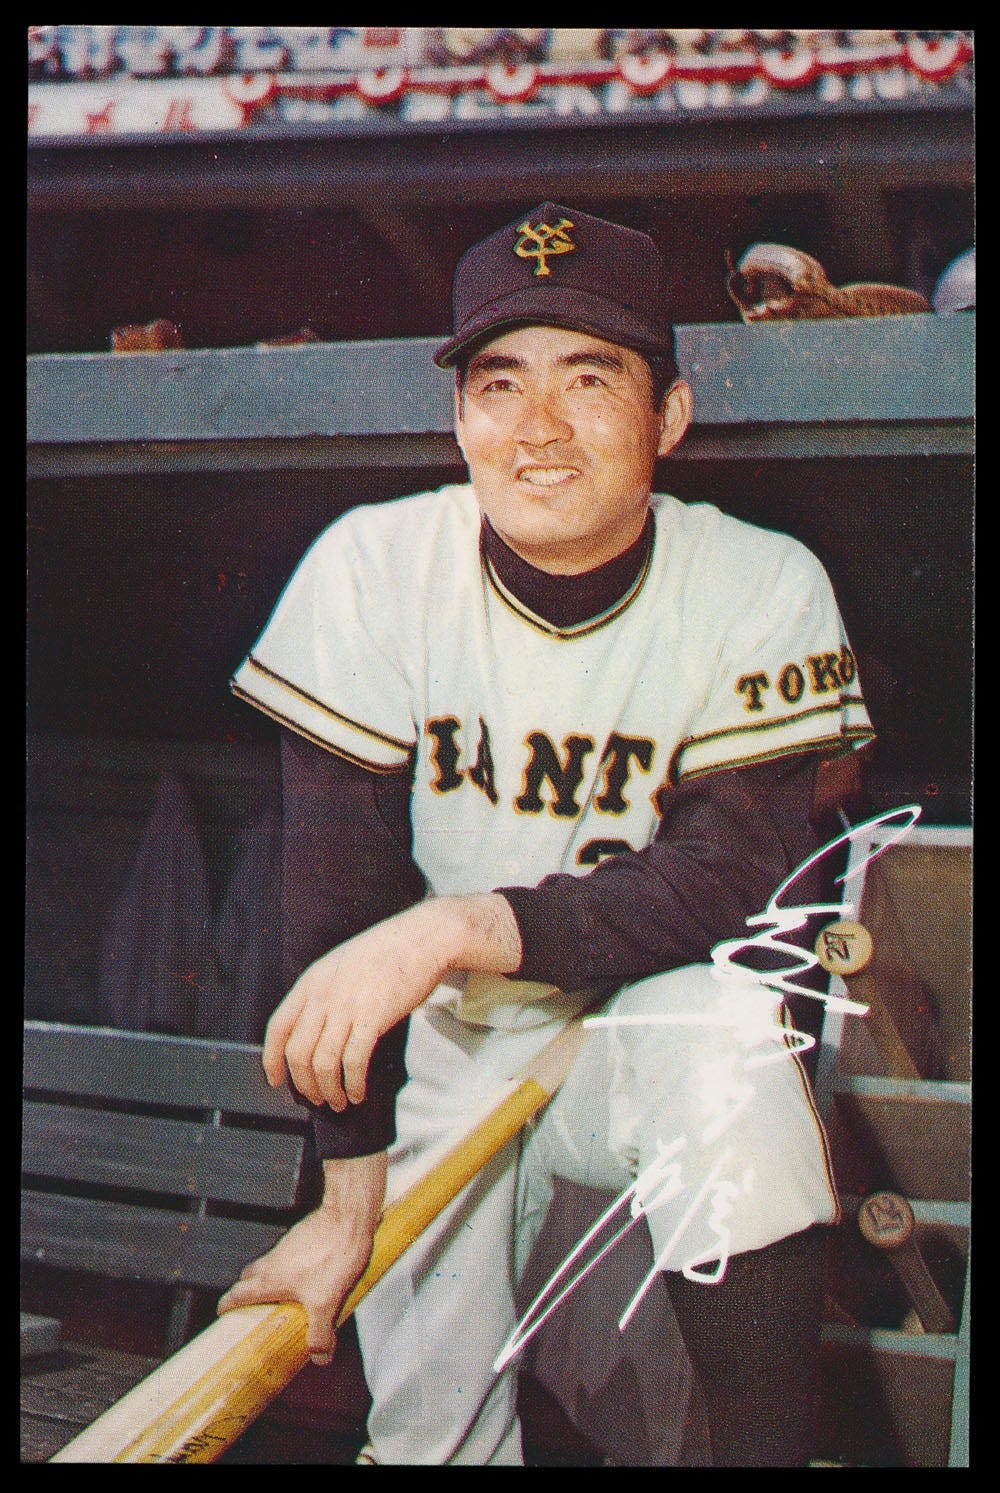 Yankees former slugger Hideki Matsui elected to NPB Hall of Fame